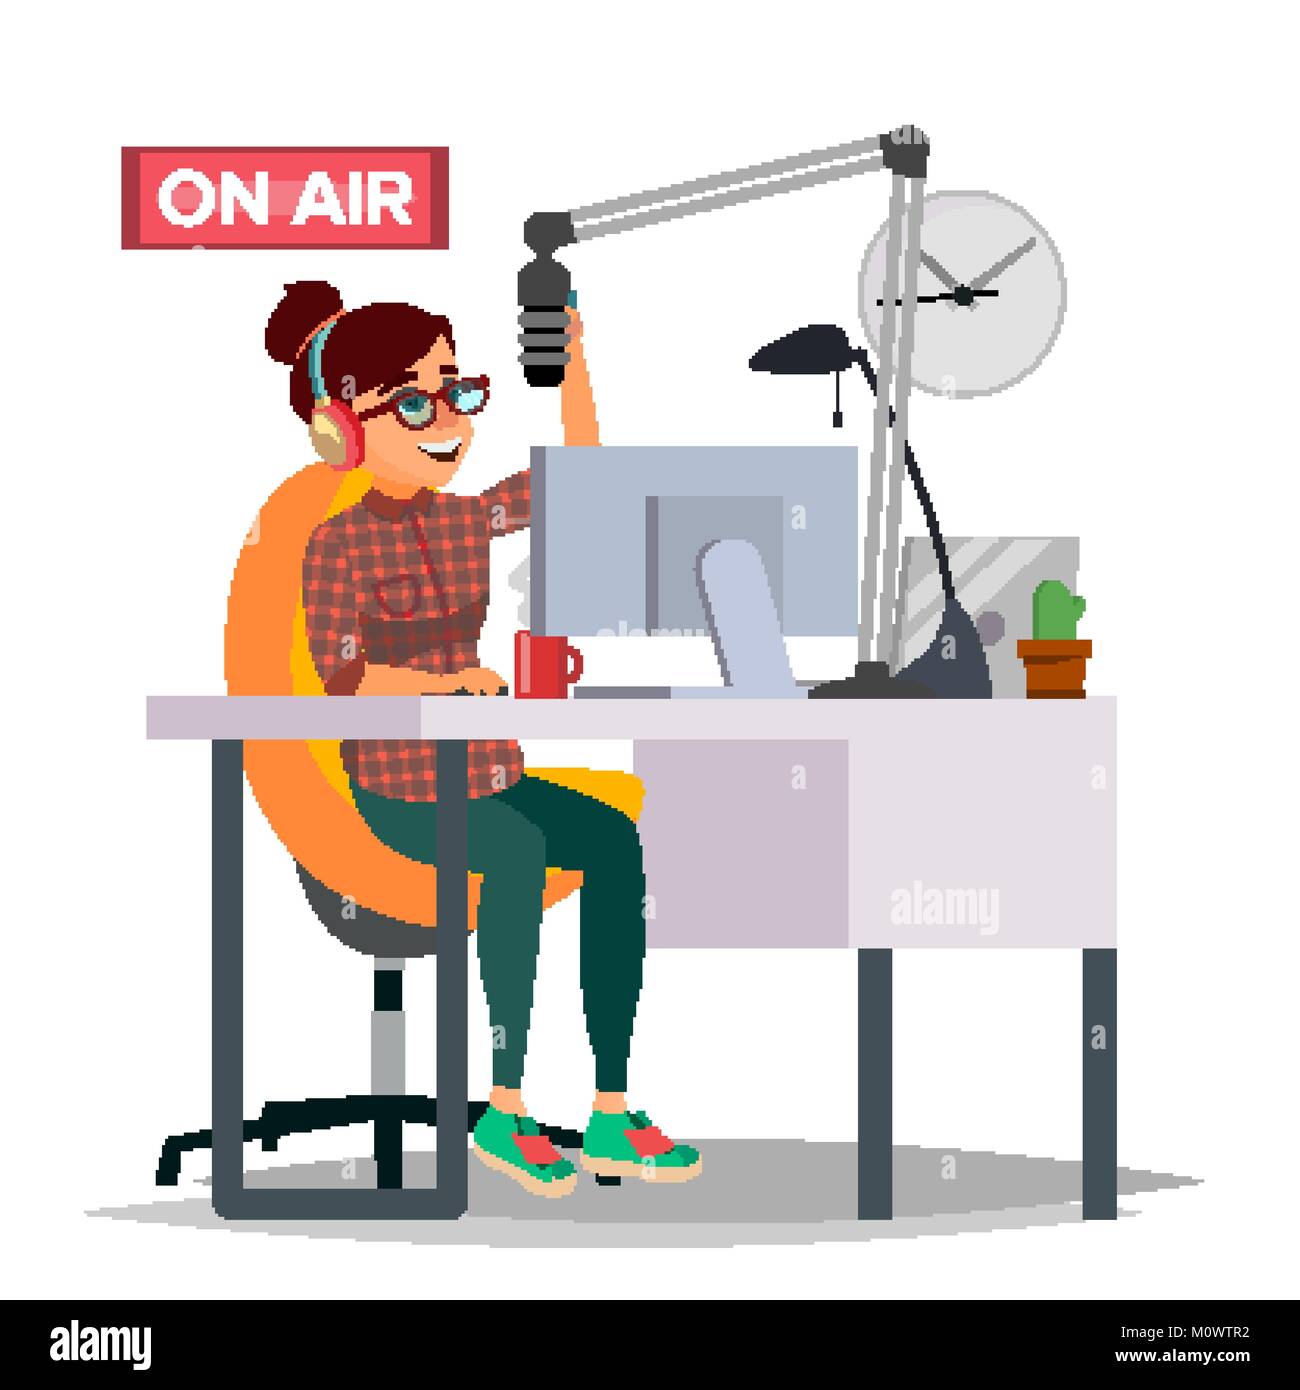 Radio DJ Woman Vector. Broadcasting. Modern Radio Station. Female Speak Into The Microphone. On Air. Broadcasting. Isolated Flat Cartoon Illustration Stock Vector